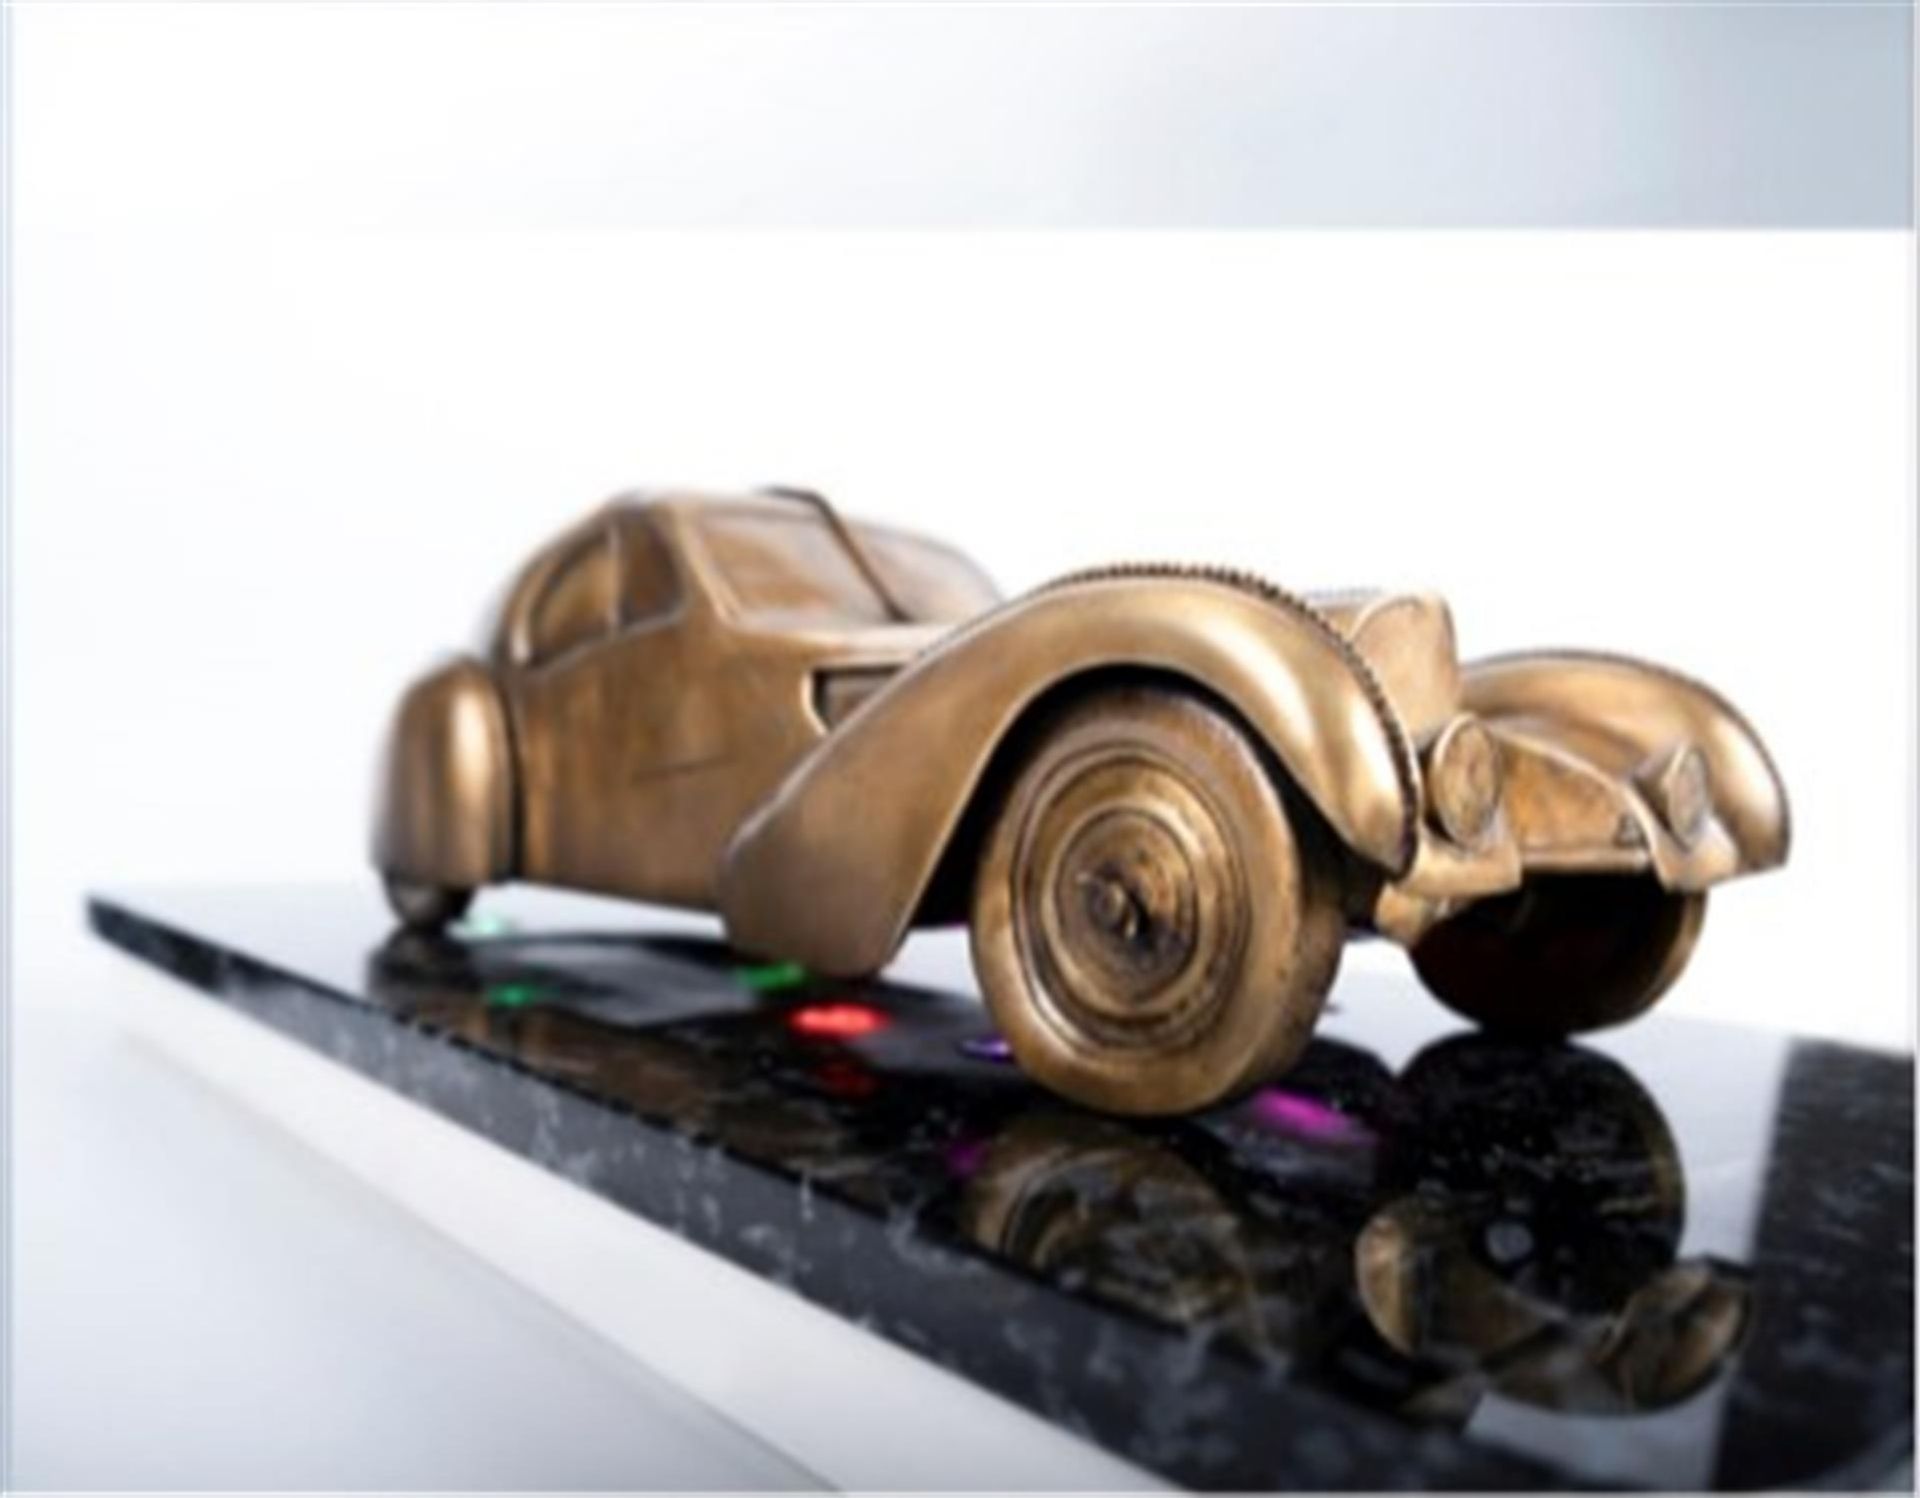 Bugatti Atlantic Type 57SC - Brass Sculpture by Phillip Dutton-White - Image 2 of 4